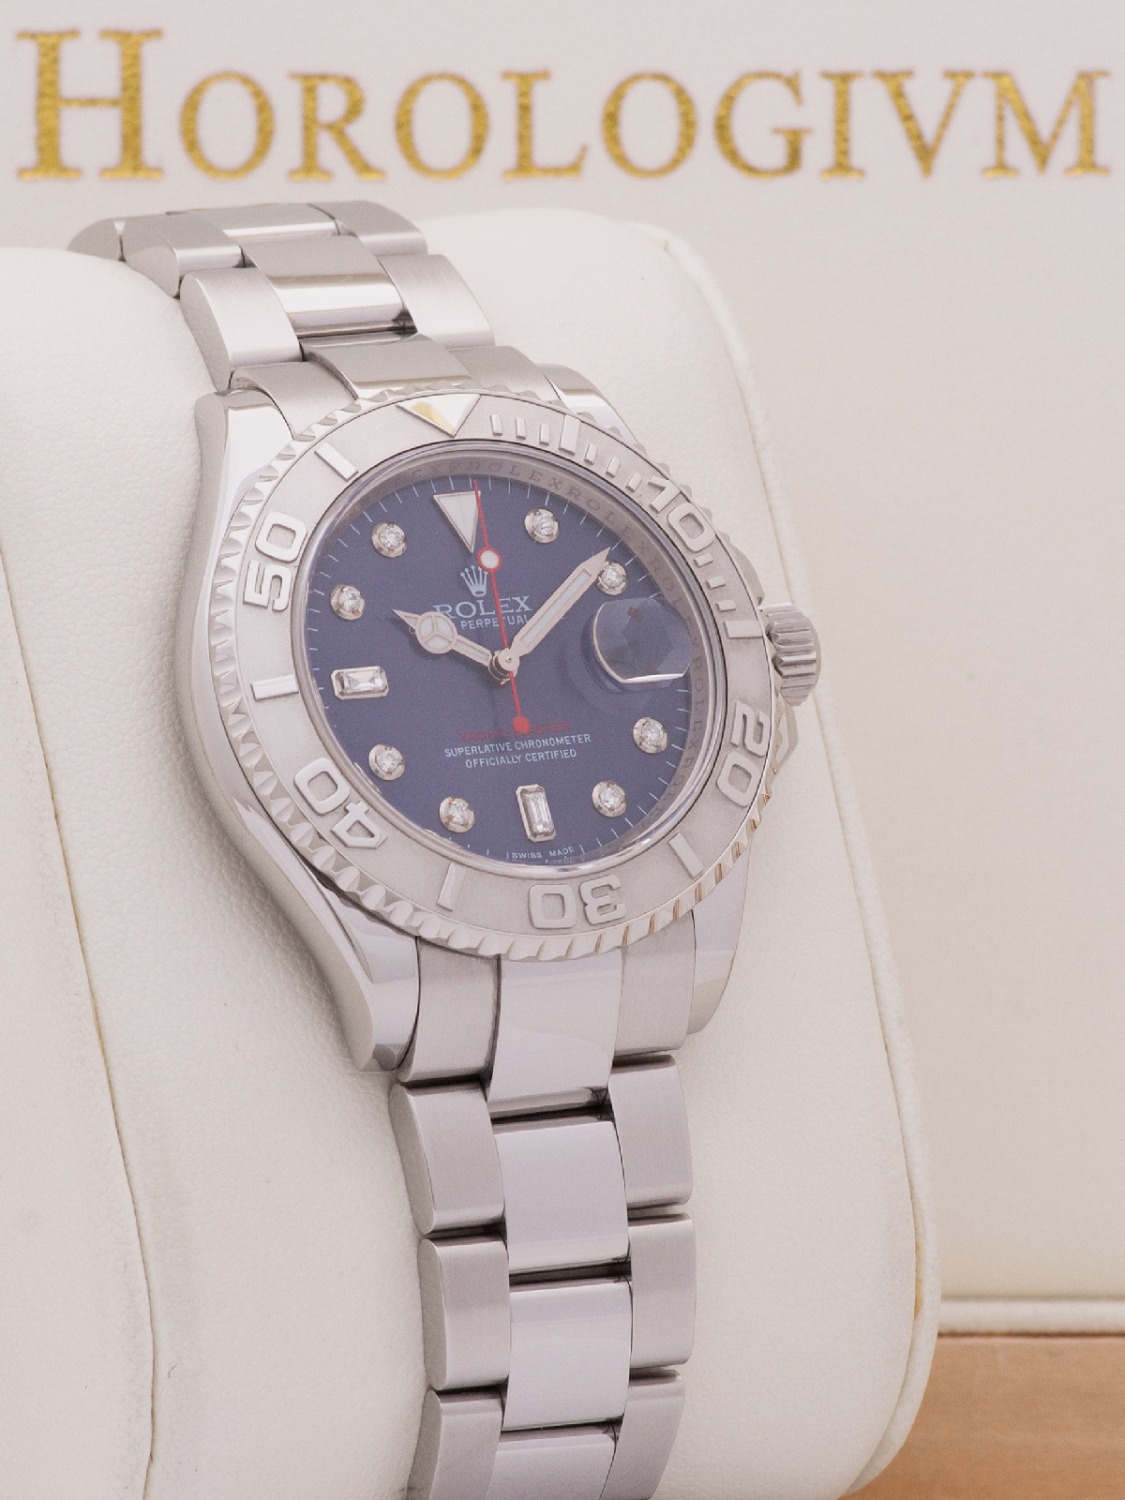 Rolex Yacht-Master 40MM Blue Dial watch, silver